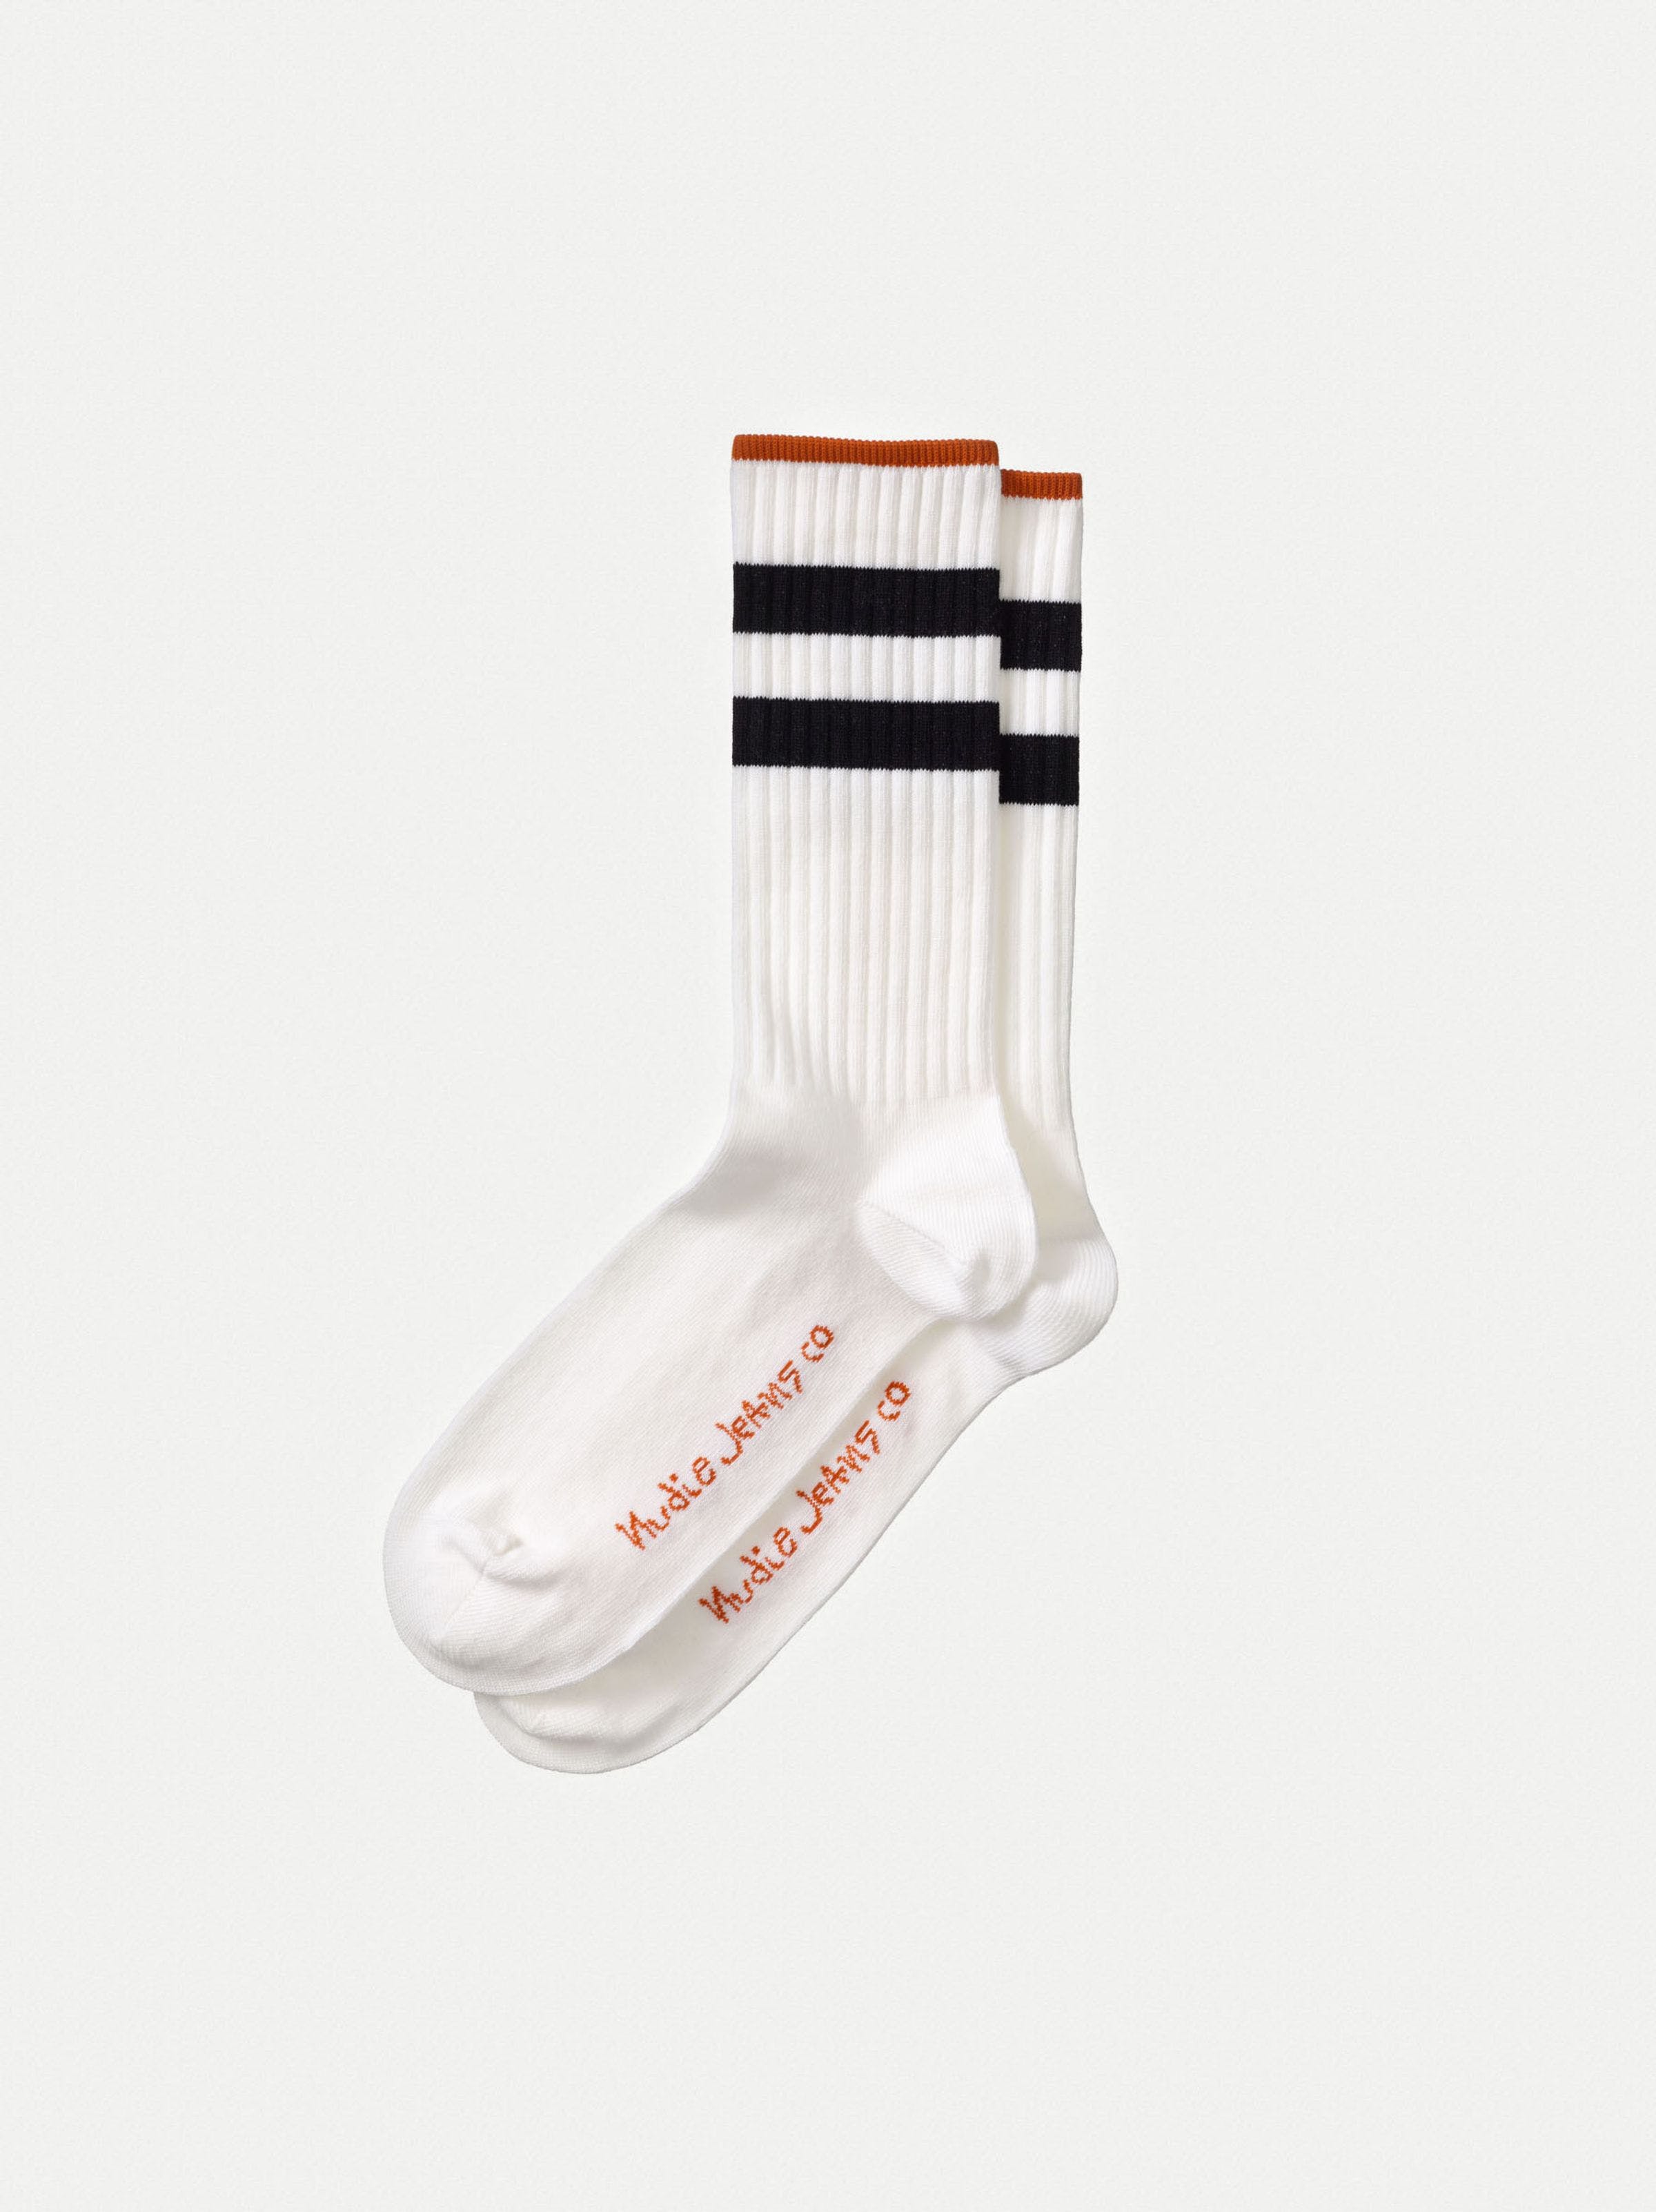 Nudie - Amundsson Sport Socks - Dusty White